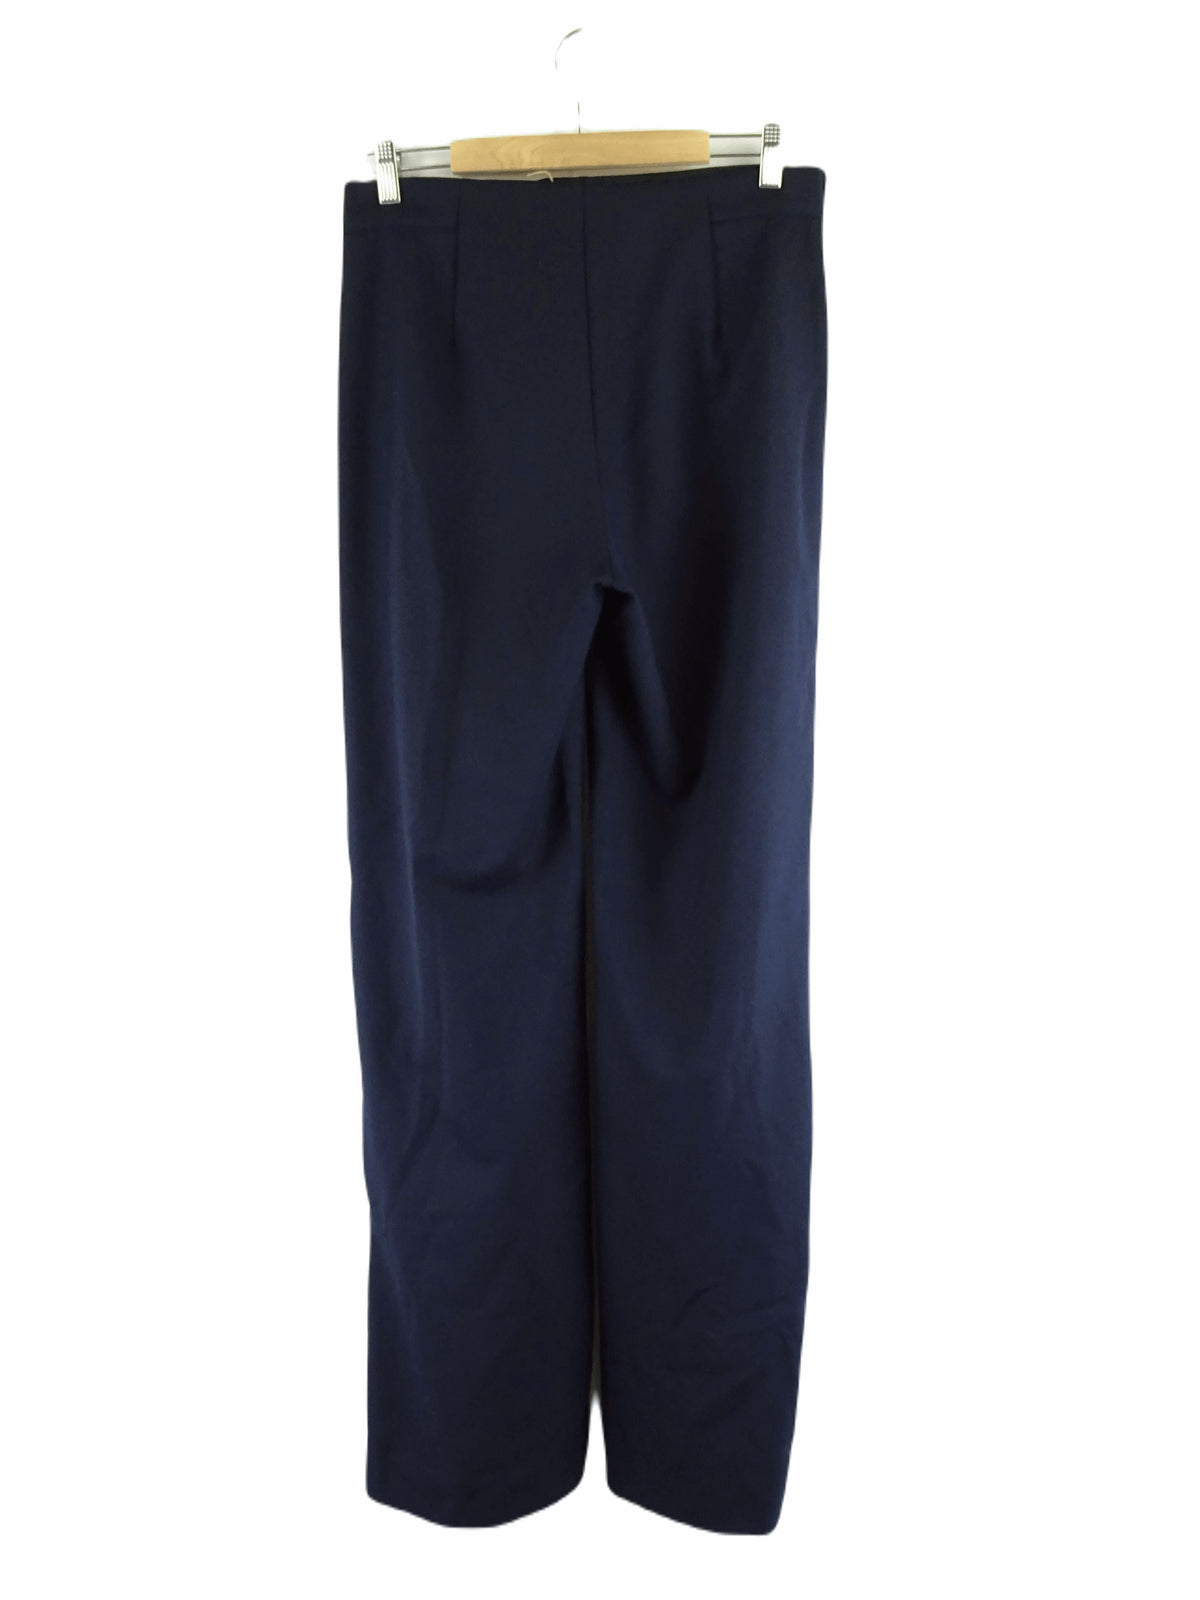 Zara Navy Blue Pants M